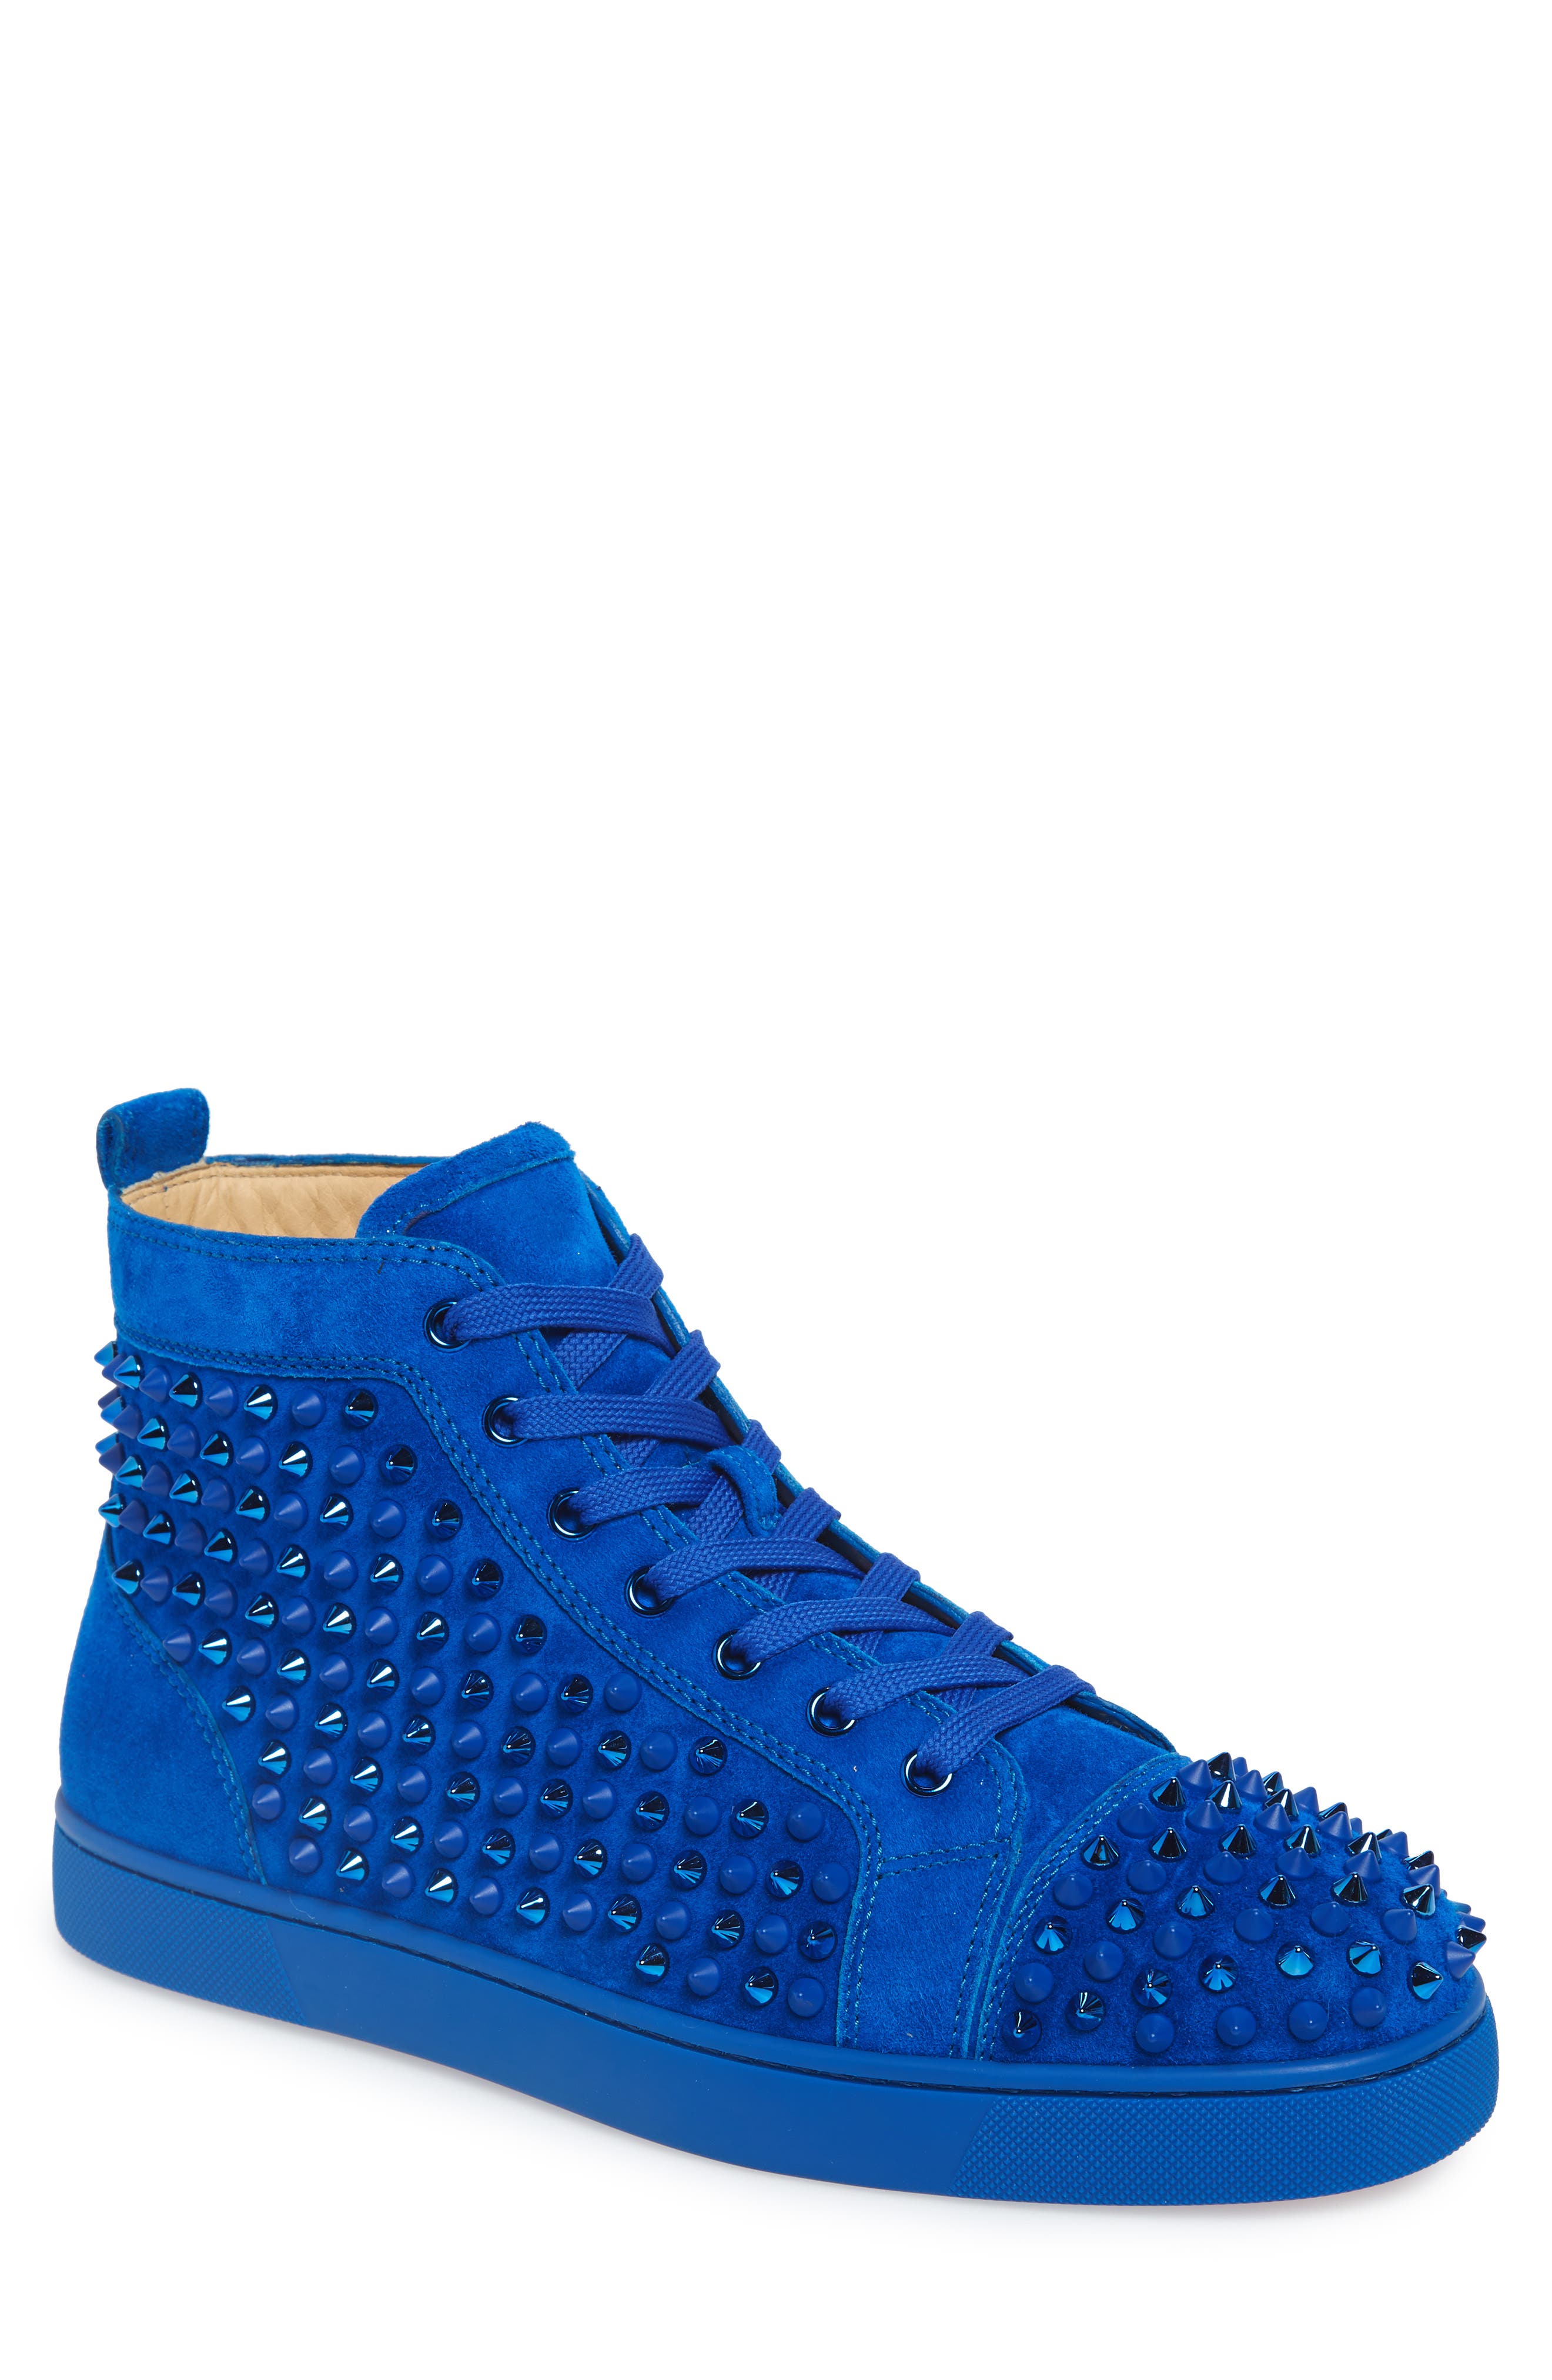 louboutin shoes blue